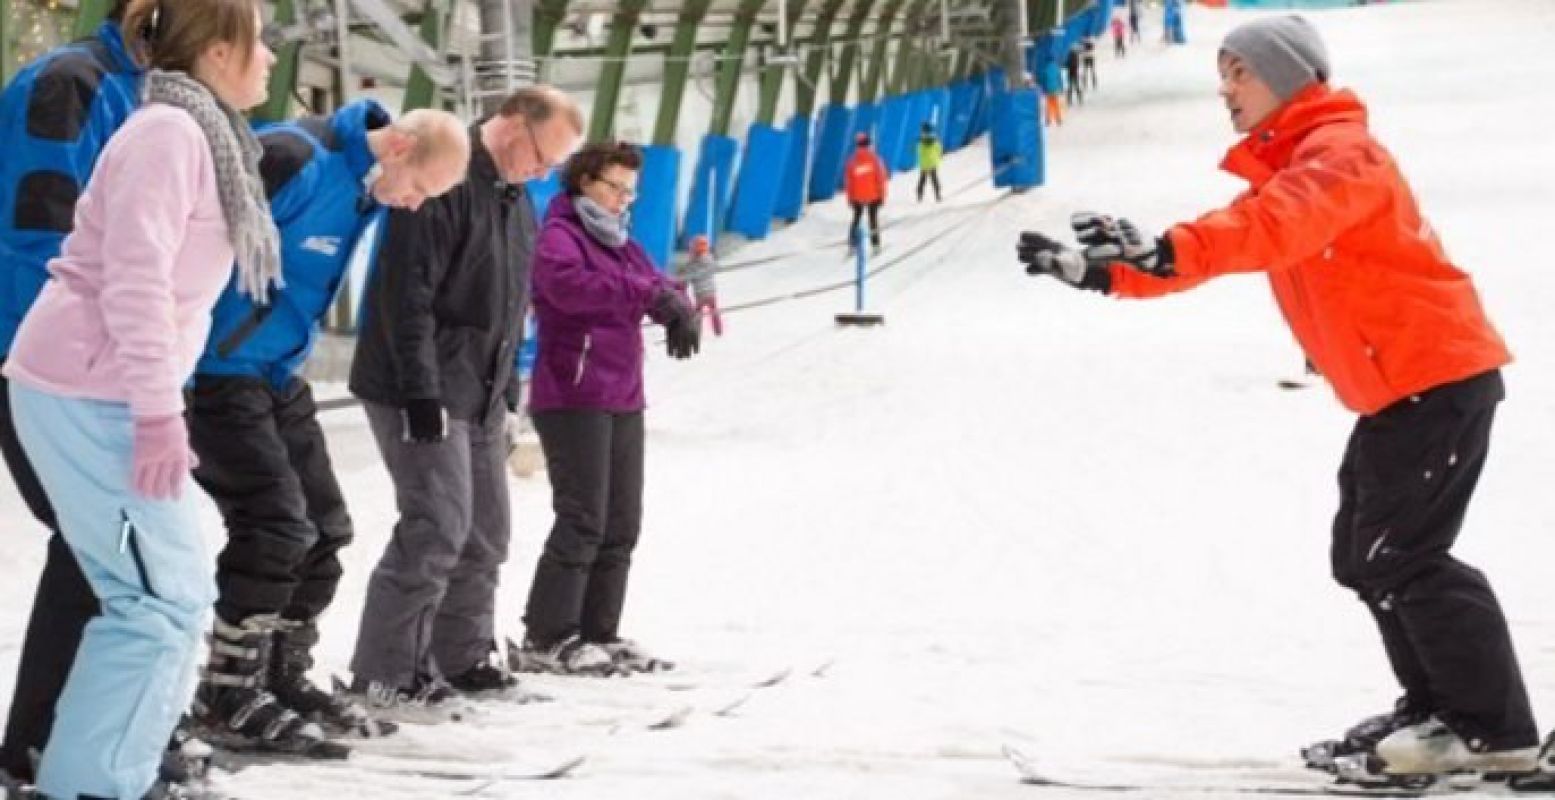 Voorproefje op alle wintersportpret. Foto: Skidome Rucphen